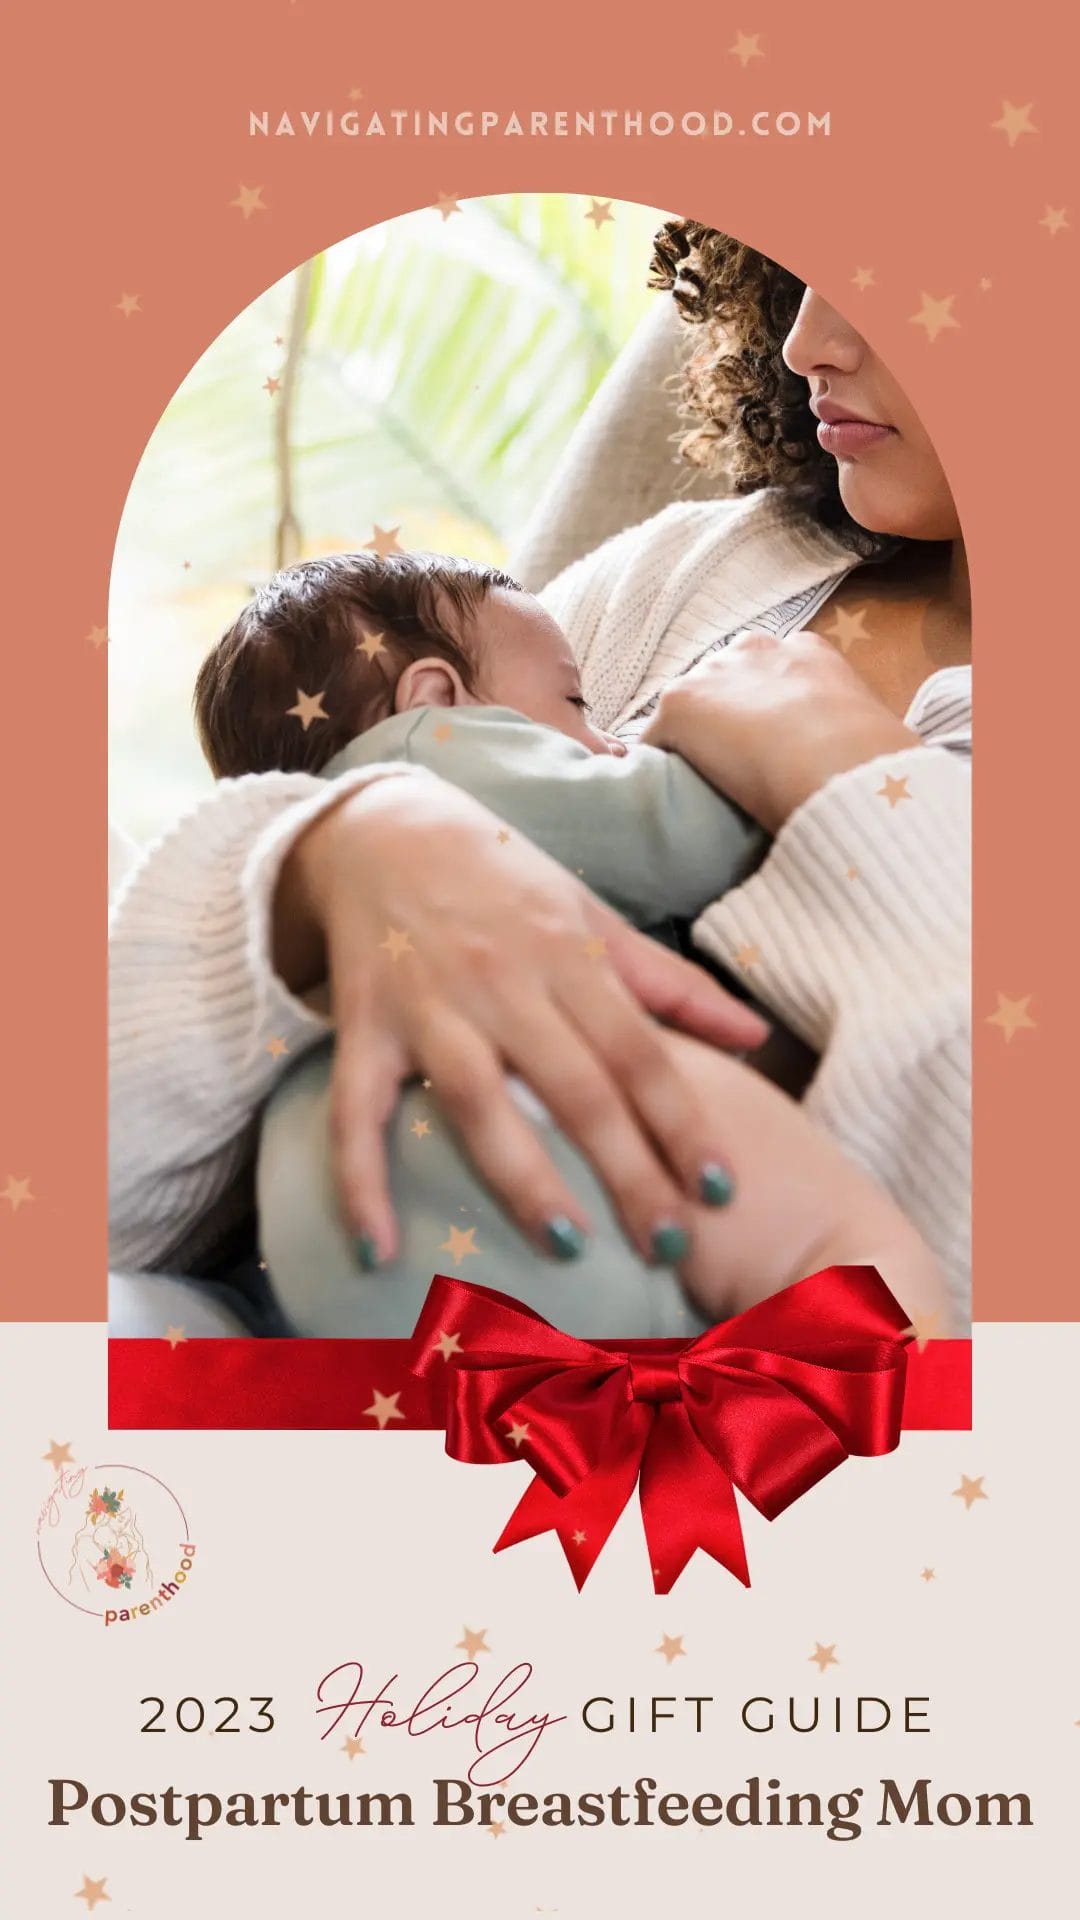 https://eijawg499nj.exactdn.com/wp-content/uploads/2022/11/2023-postpartum-breastfeeding-mom-holiday-gift-guide-jpg.webp?strip=all&lossy=1&w=1280&ssl=1